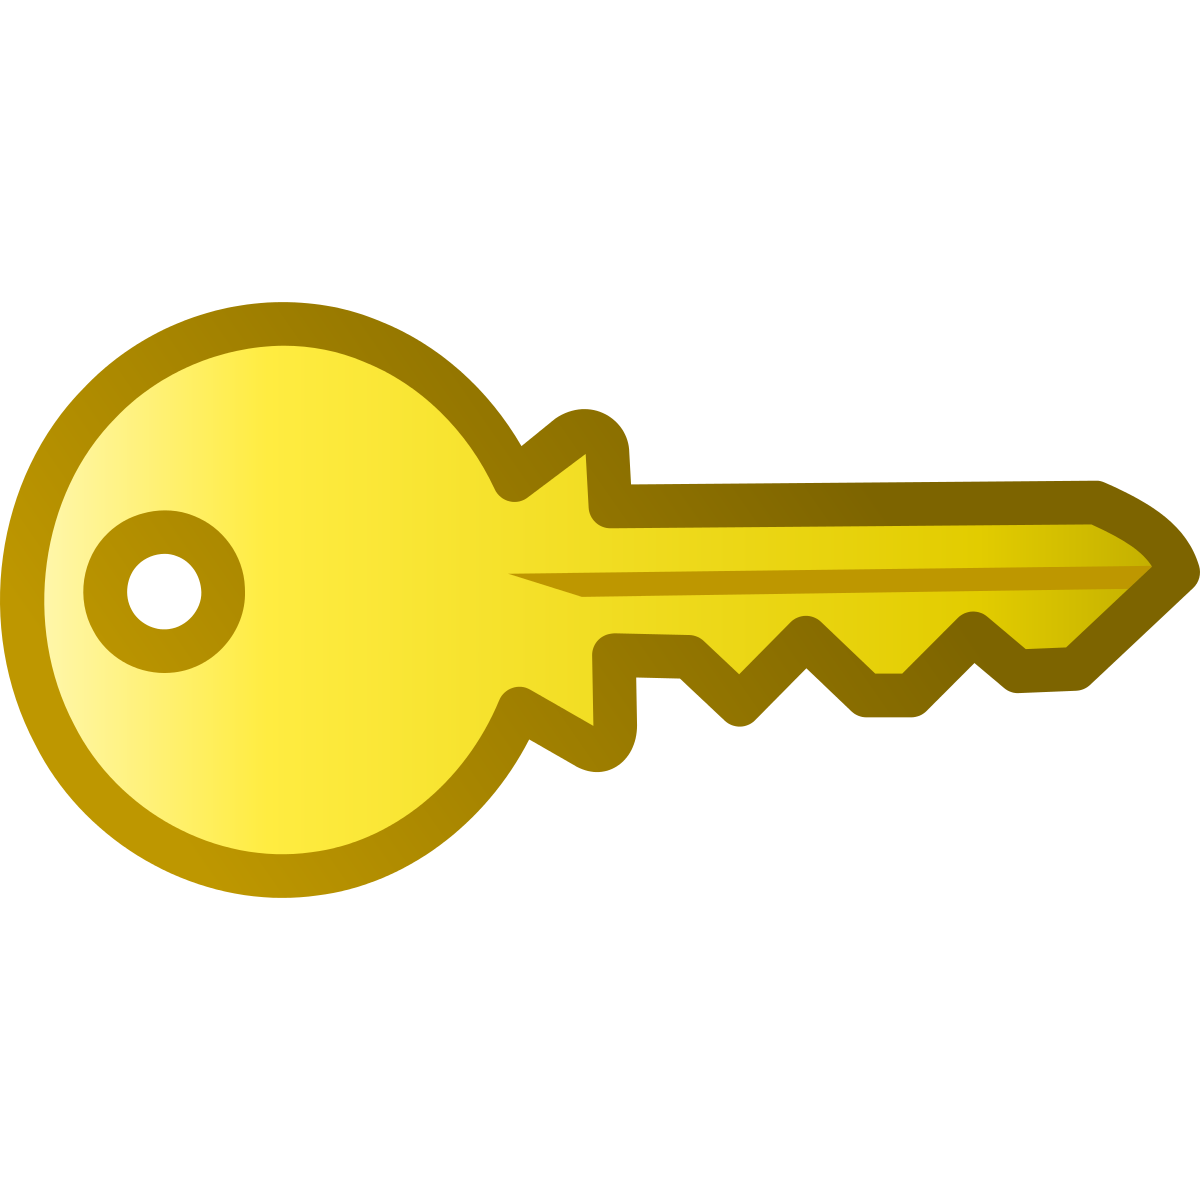 Gold Key Png Image File